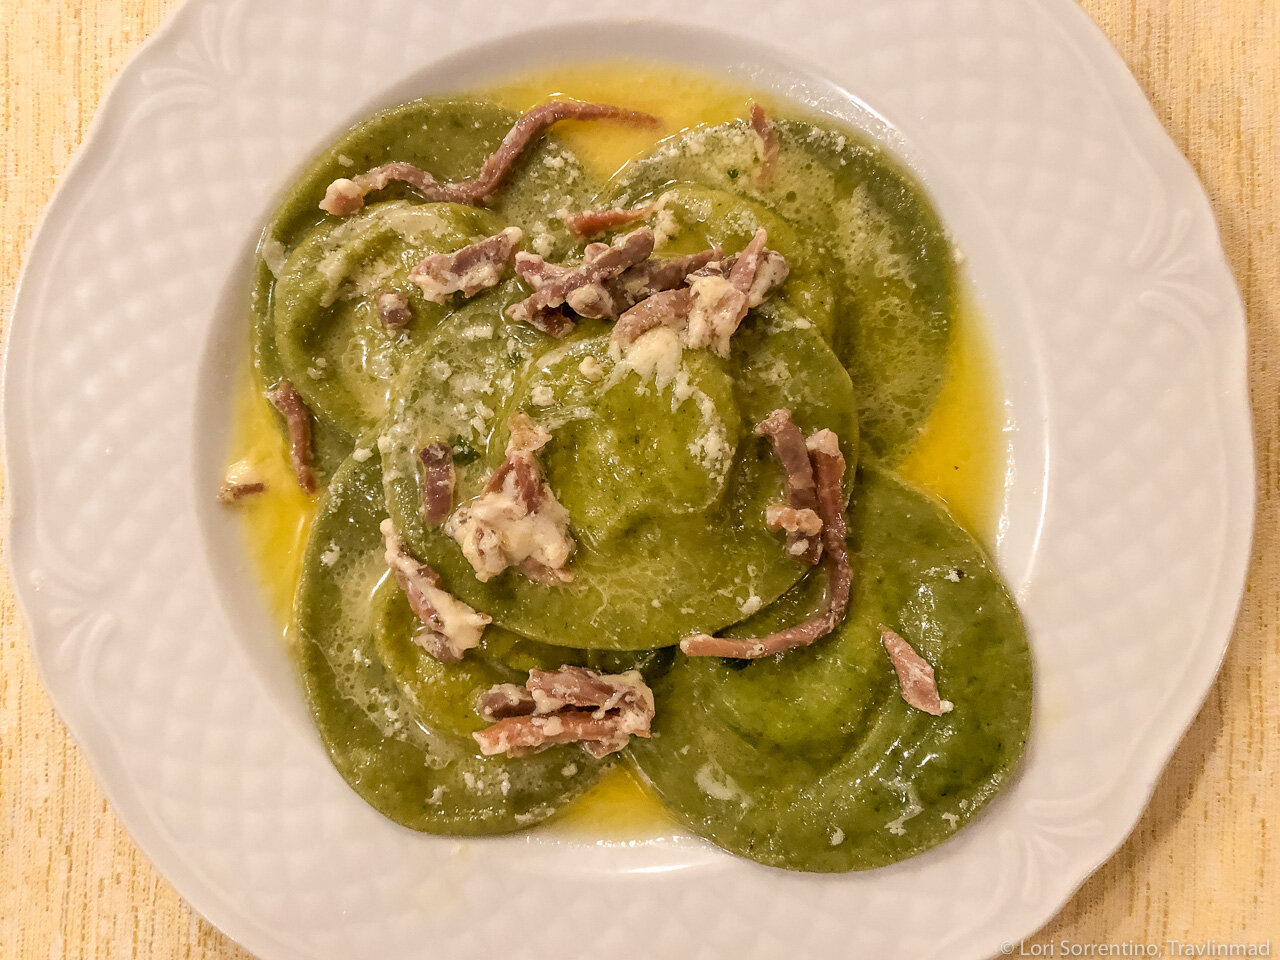 Spinach ravioli with sage